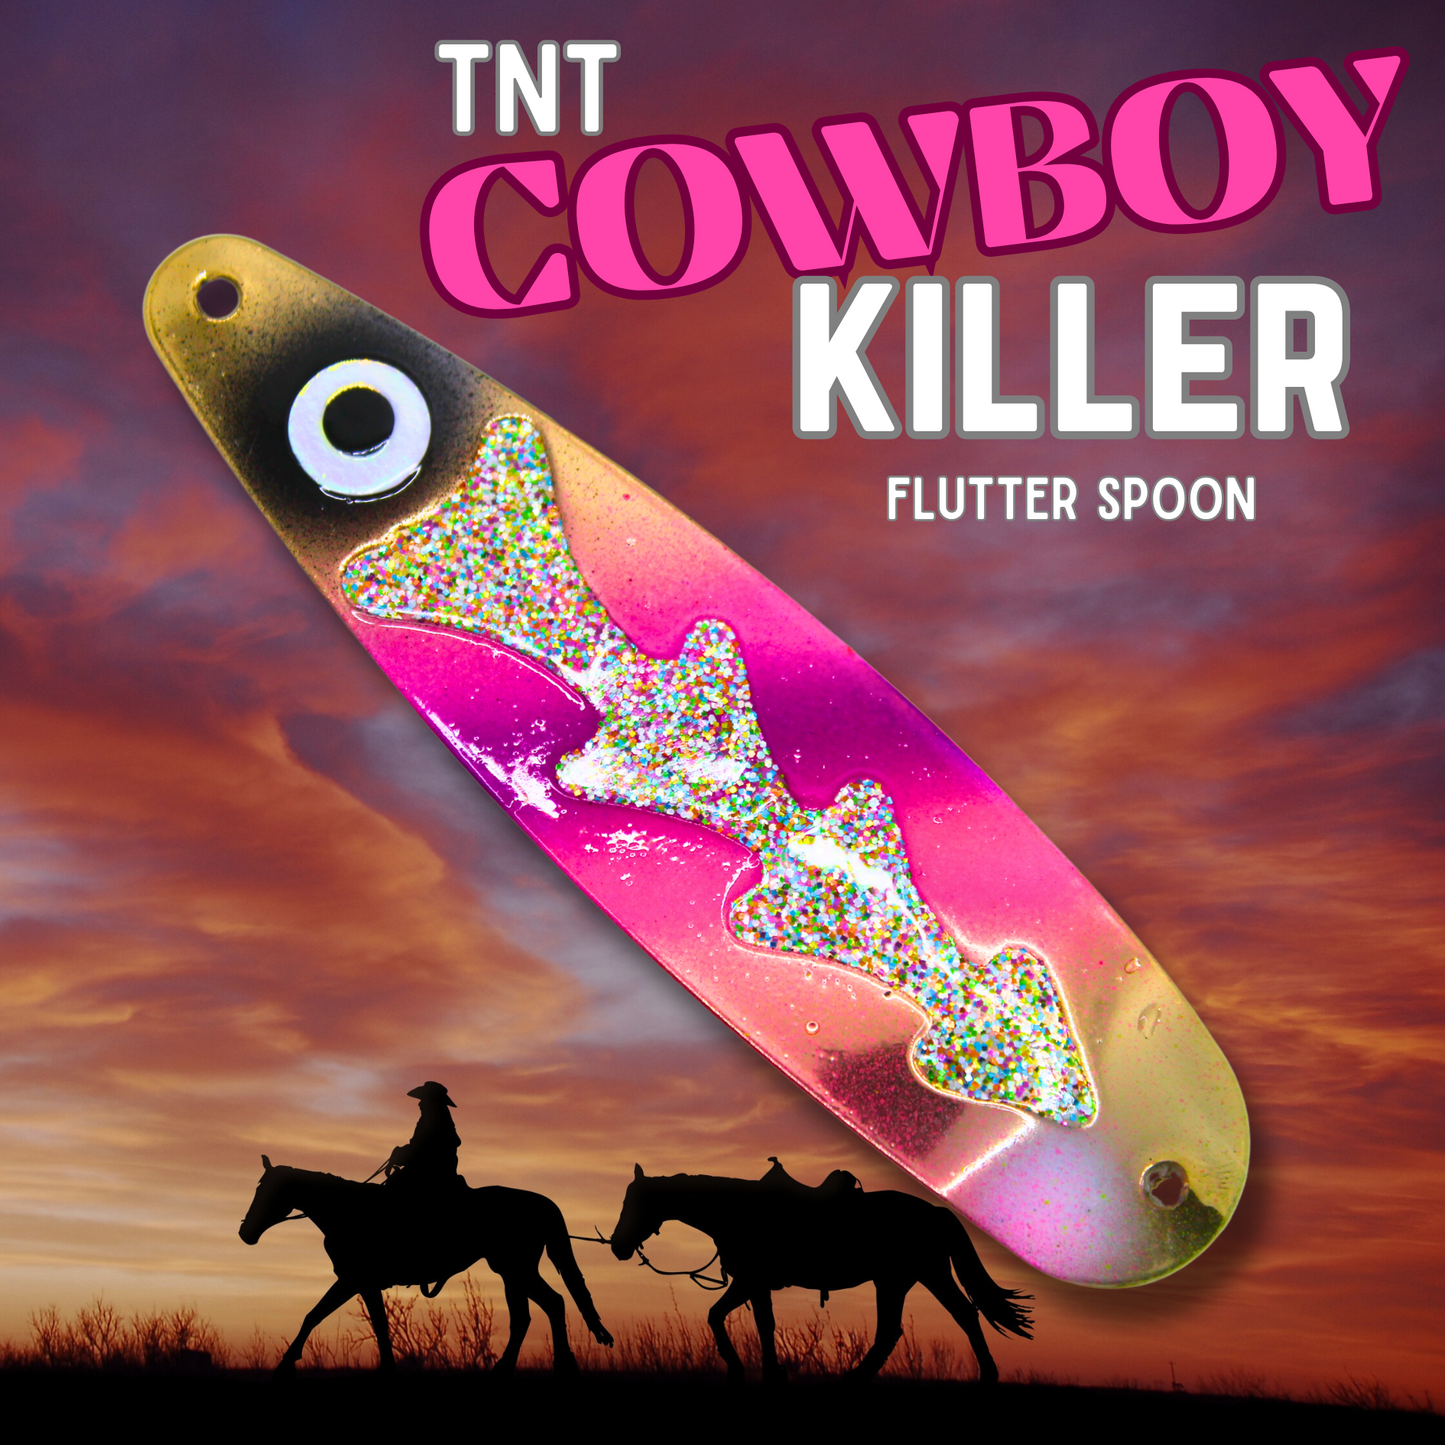 Cowboy Killer- TNT Flutter